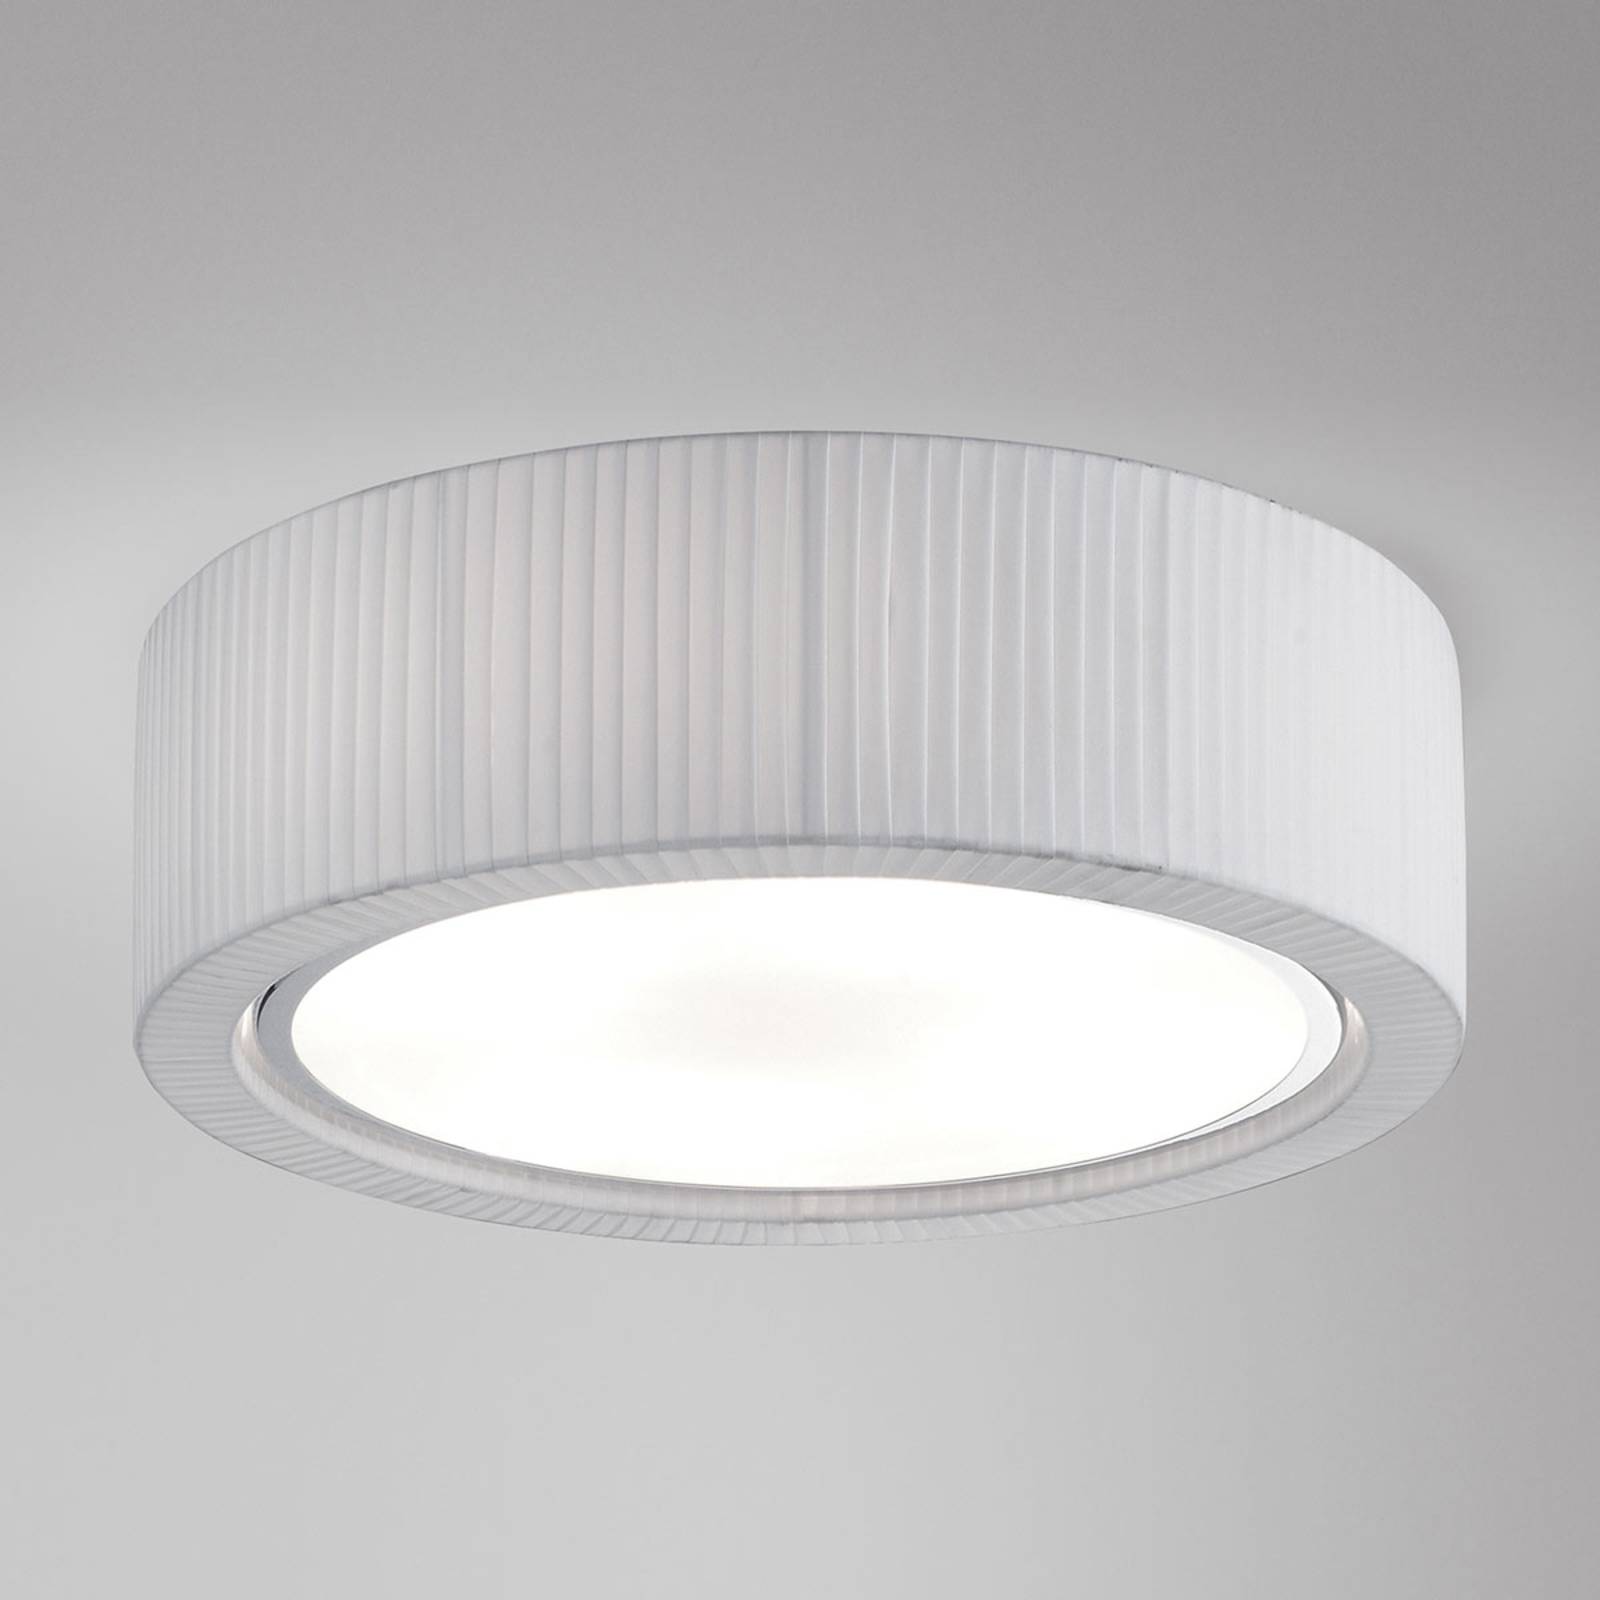 Bover Urban PF/37 plafondlamp, wit, 37 cm